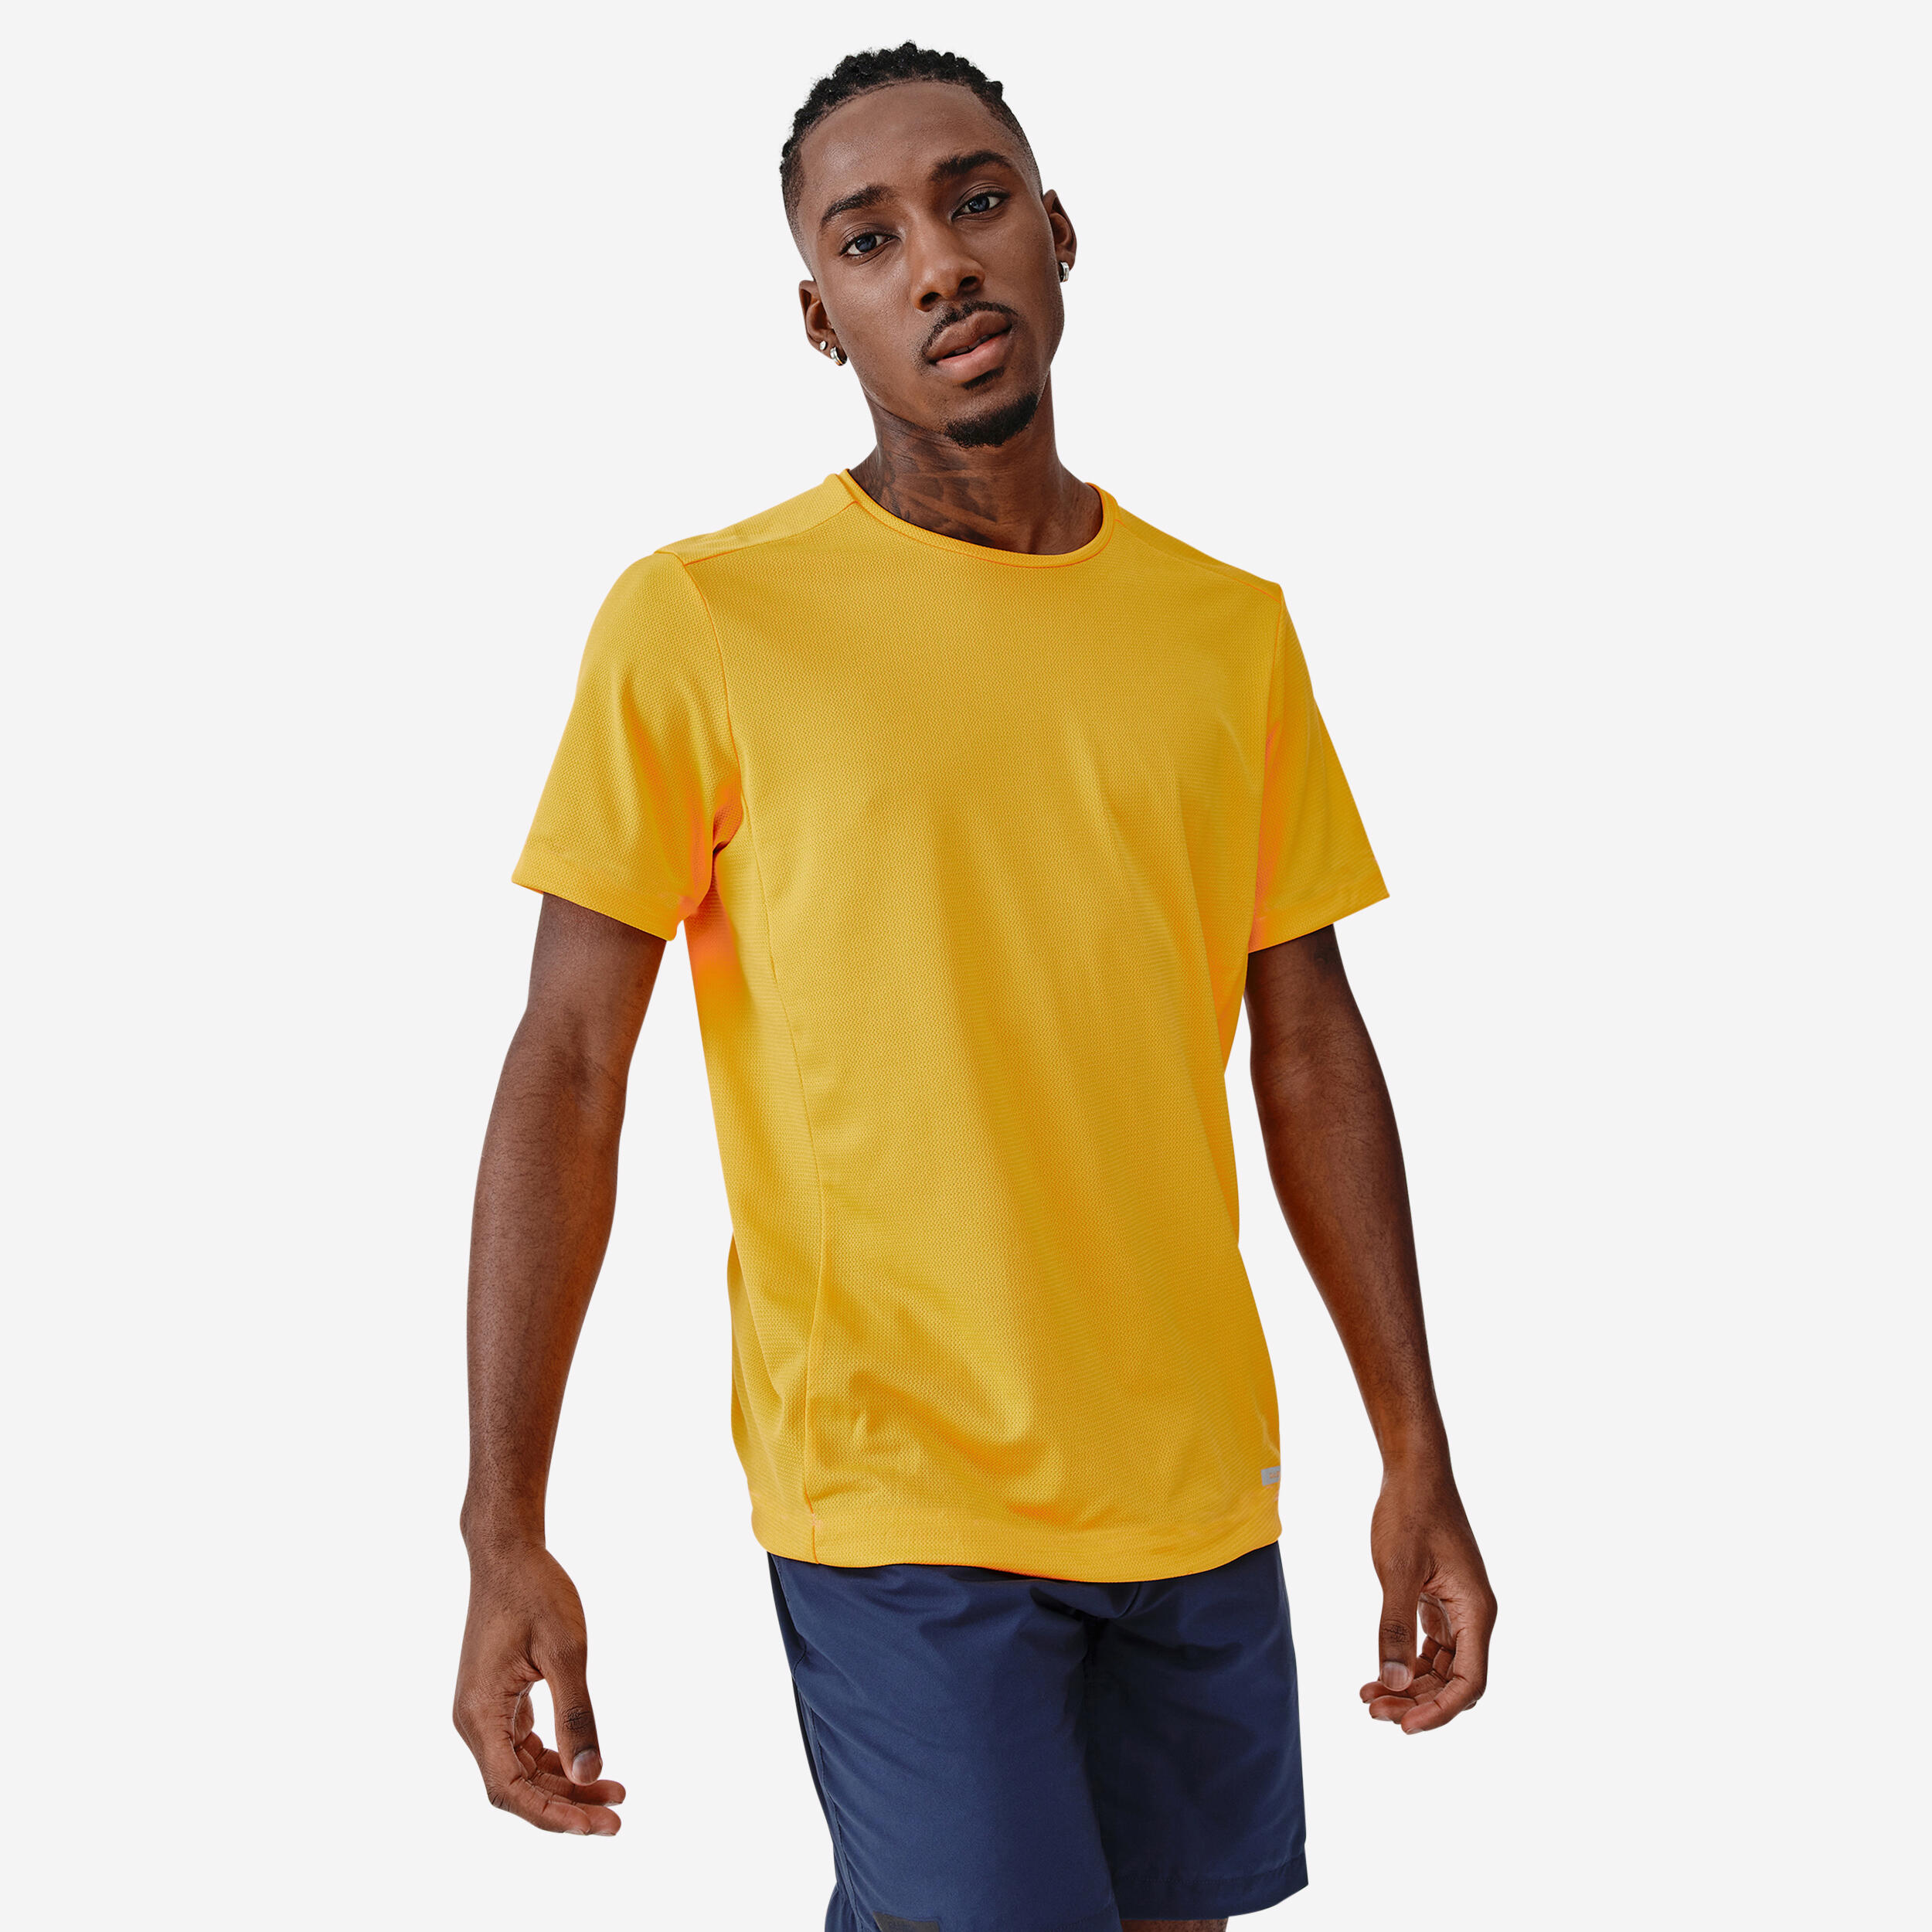 KALENJI Dry Men's Running Breathable T-Shirt Dry - mango